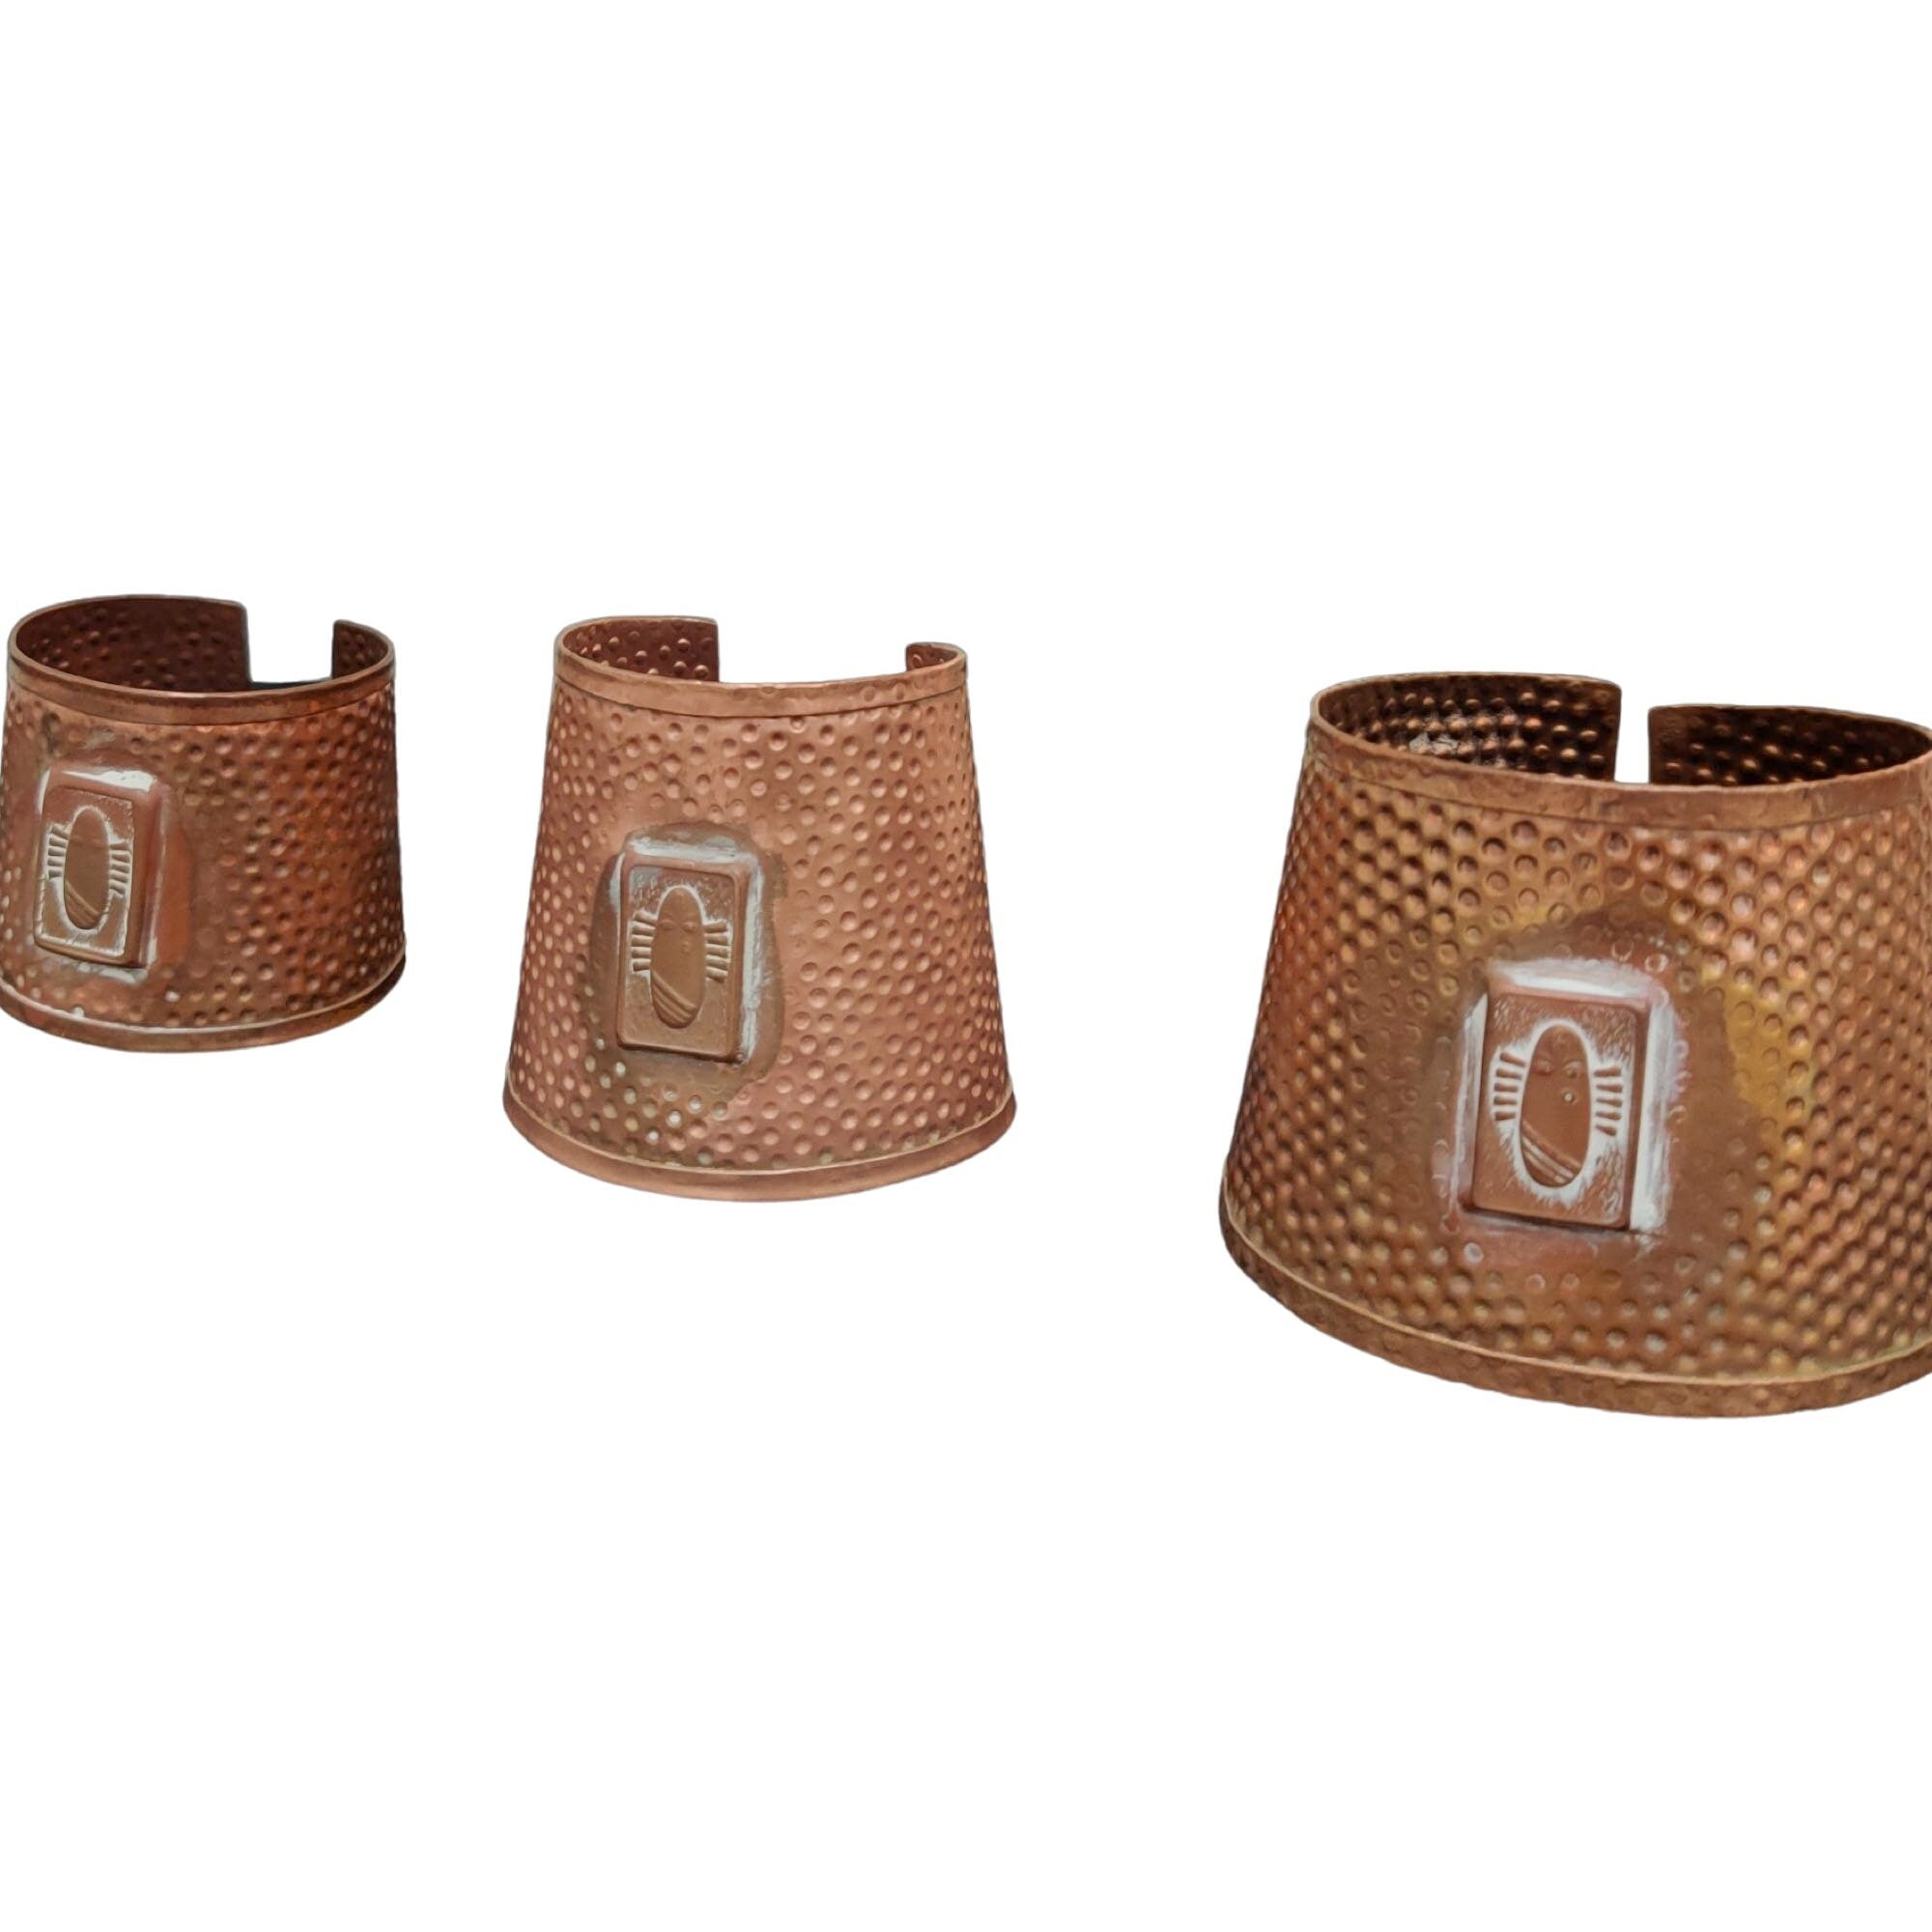 Isha Life Jai Bhairavi Devi Copper Cuff Bracelet A Festive Gift For Unisex  | eBay